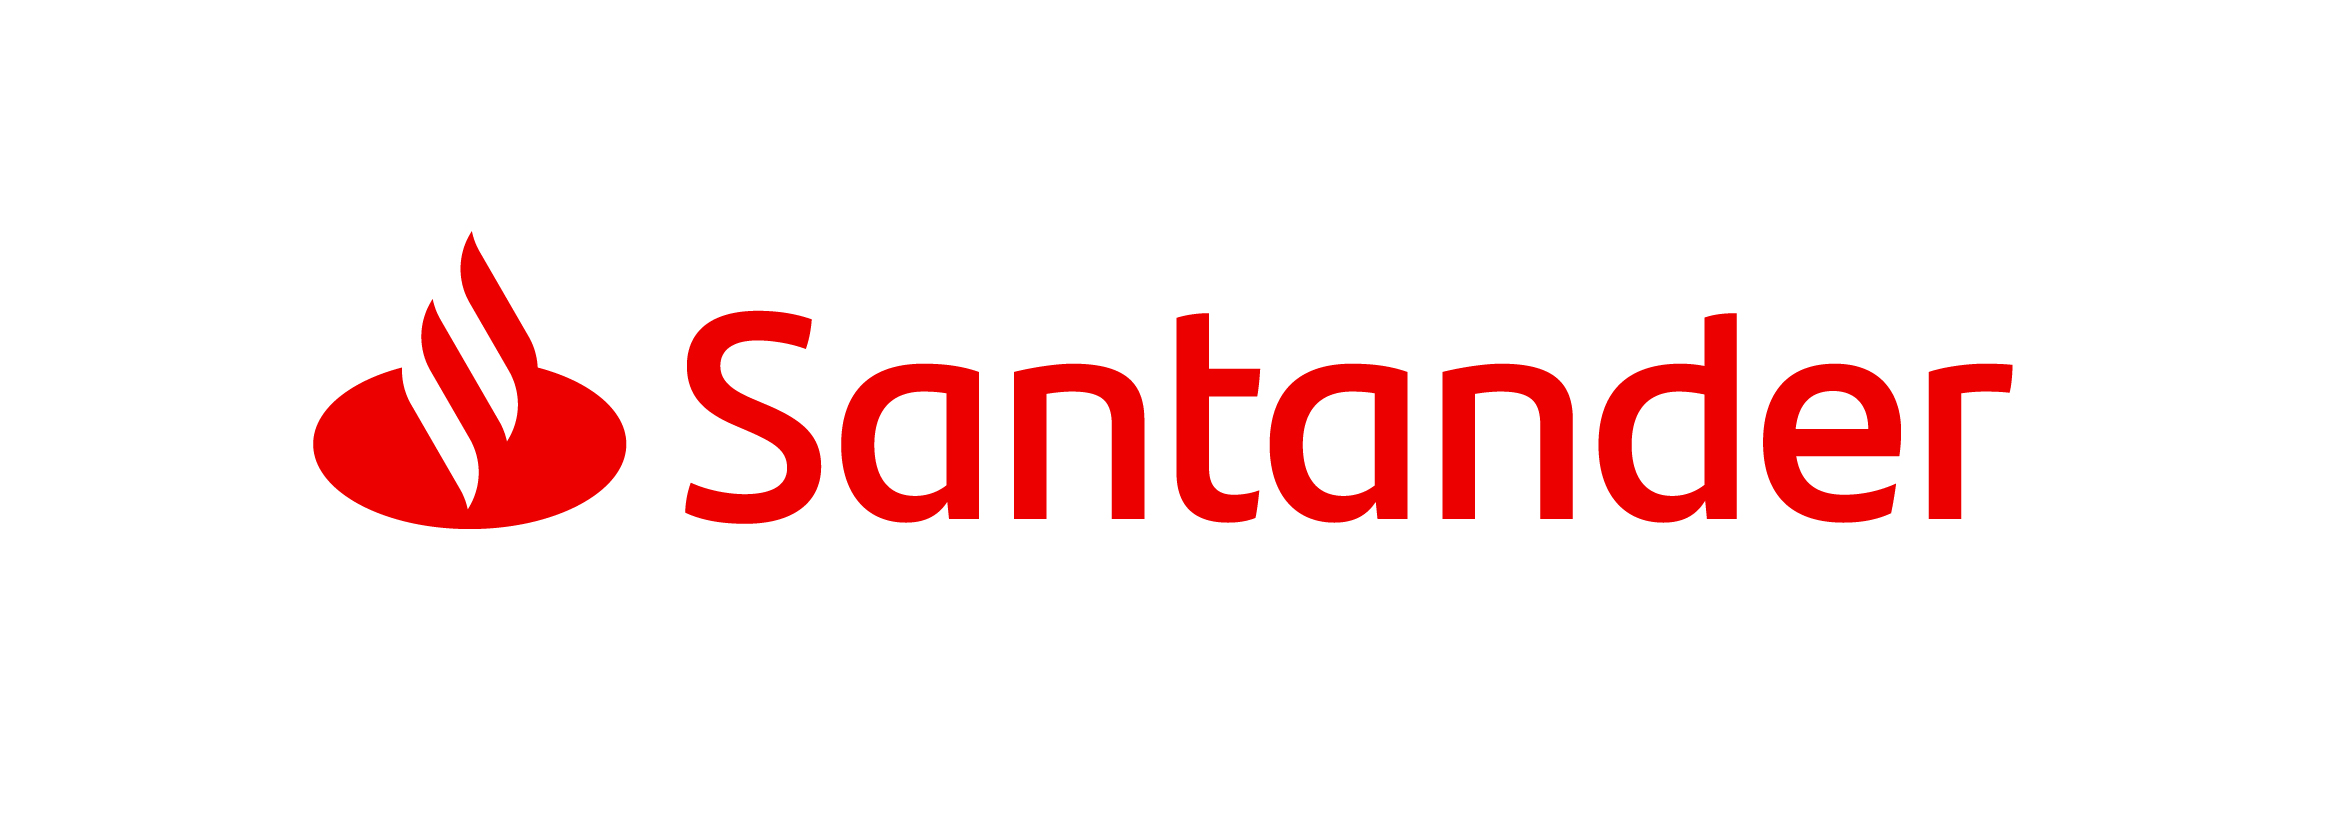 Santander Fined £108M for AML Failings